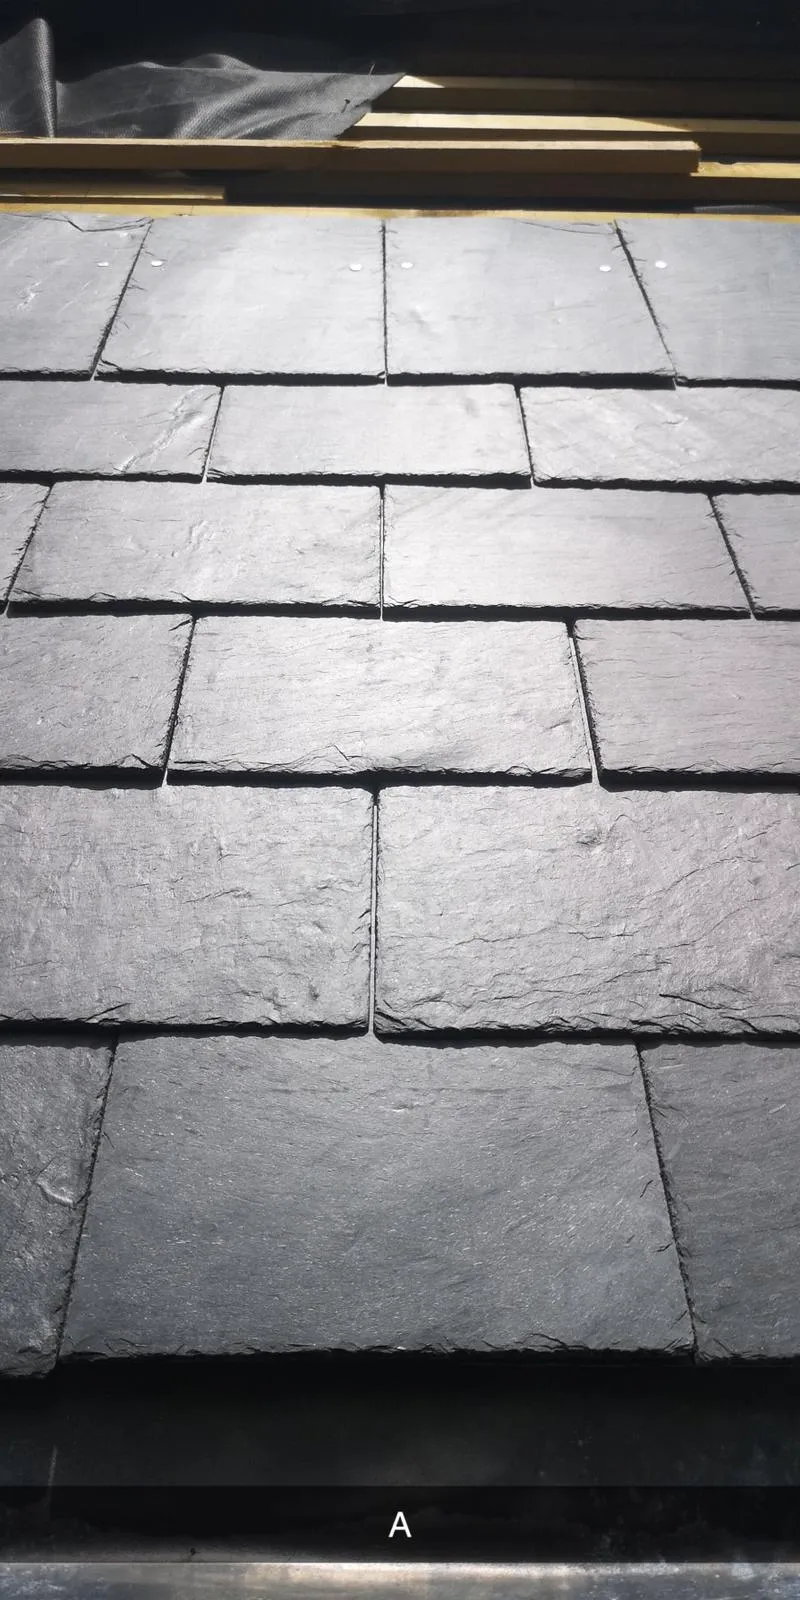 a close up of a black slate tile floor